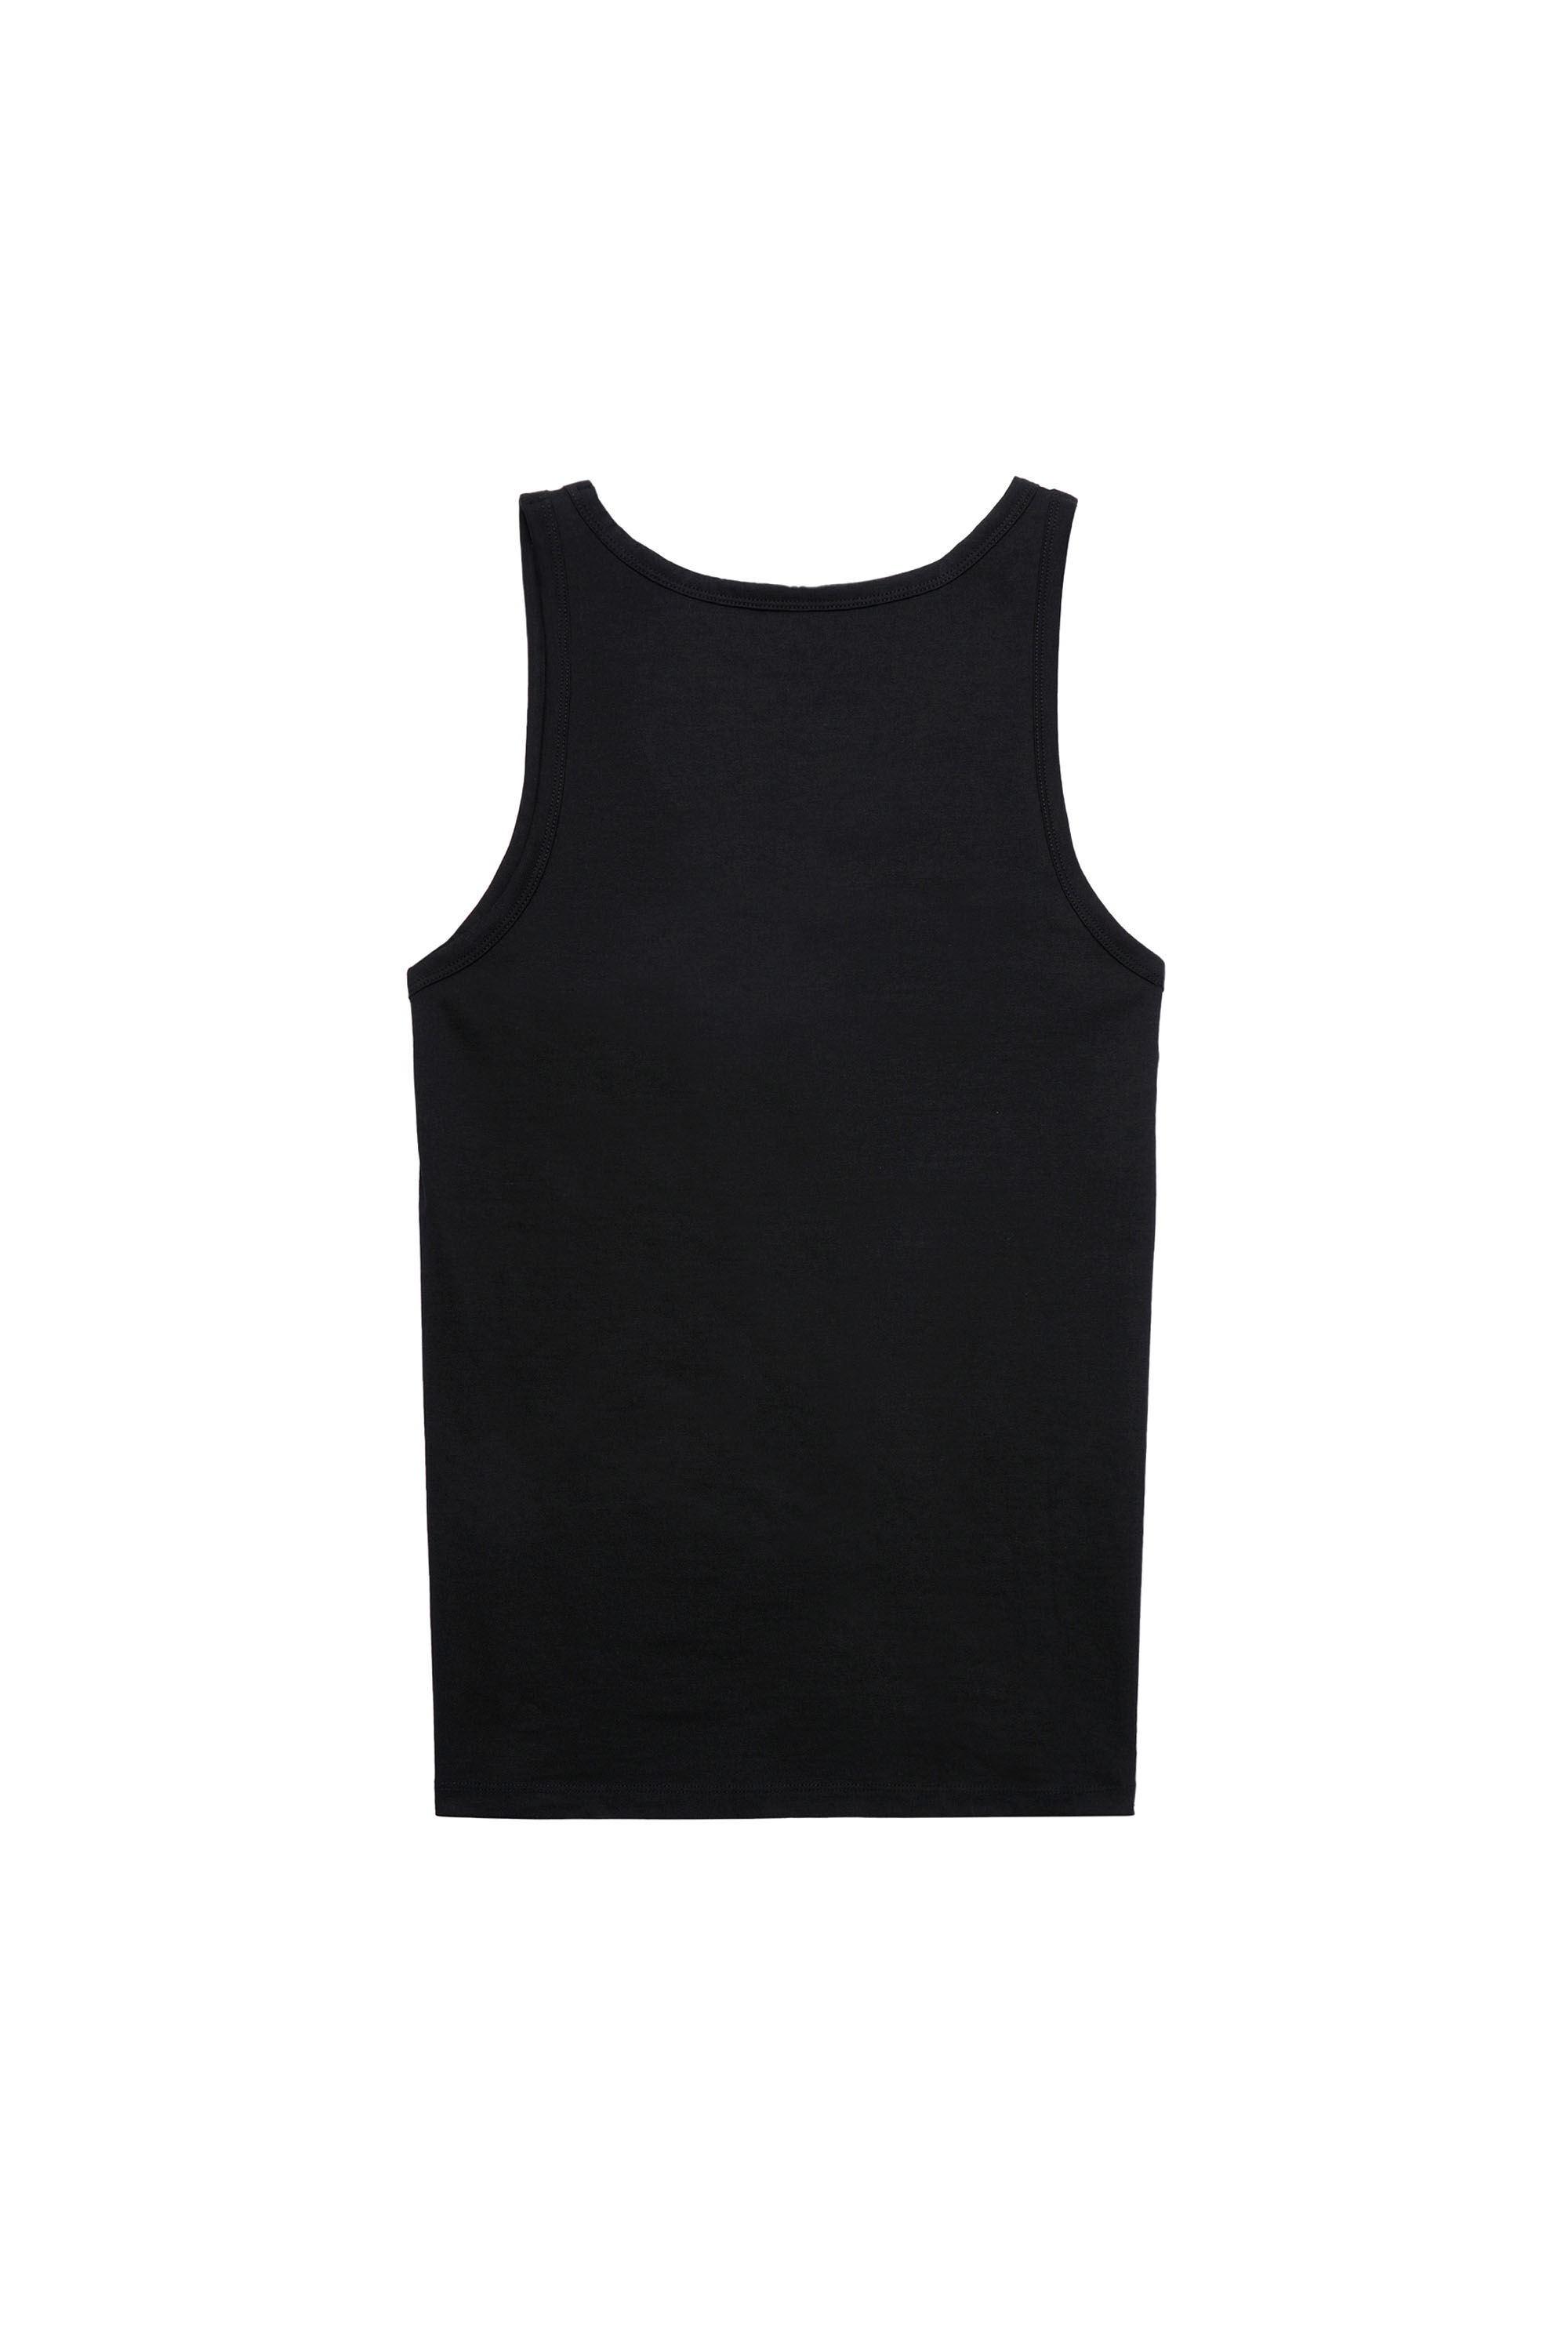 2 Pack Diesel JOHNNY-TUBE Men's Tank Top Underarmshirt Sleeveless Vest Shirt